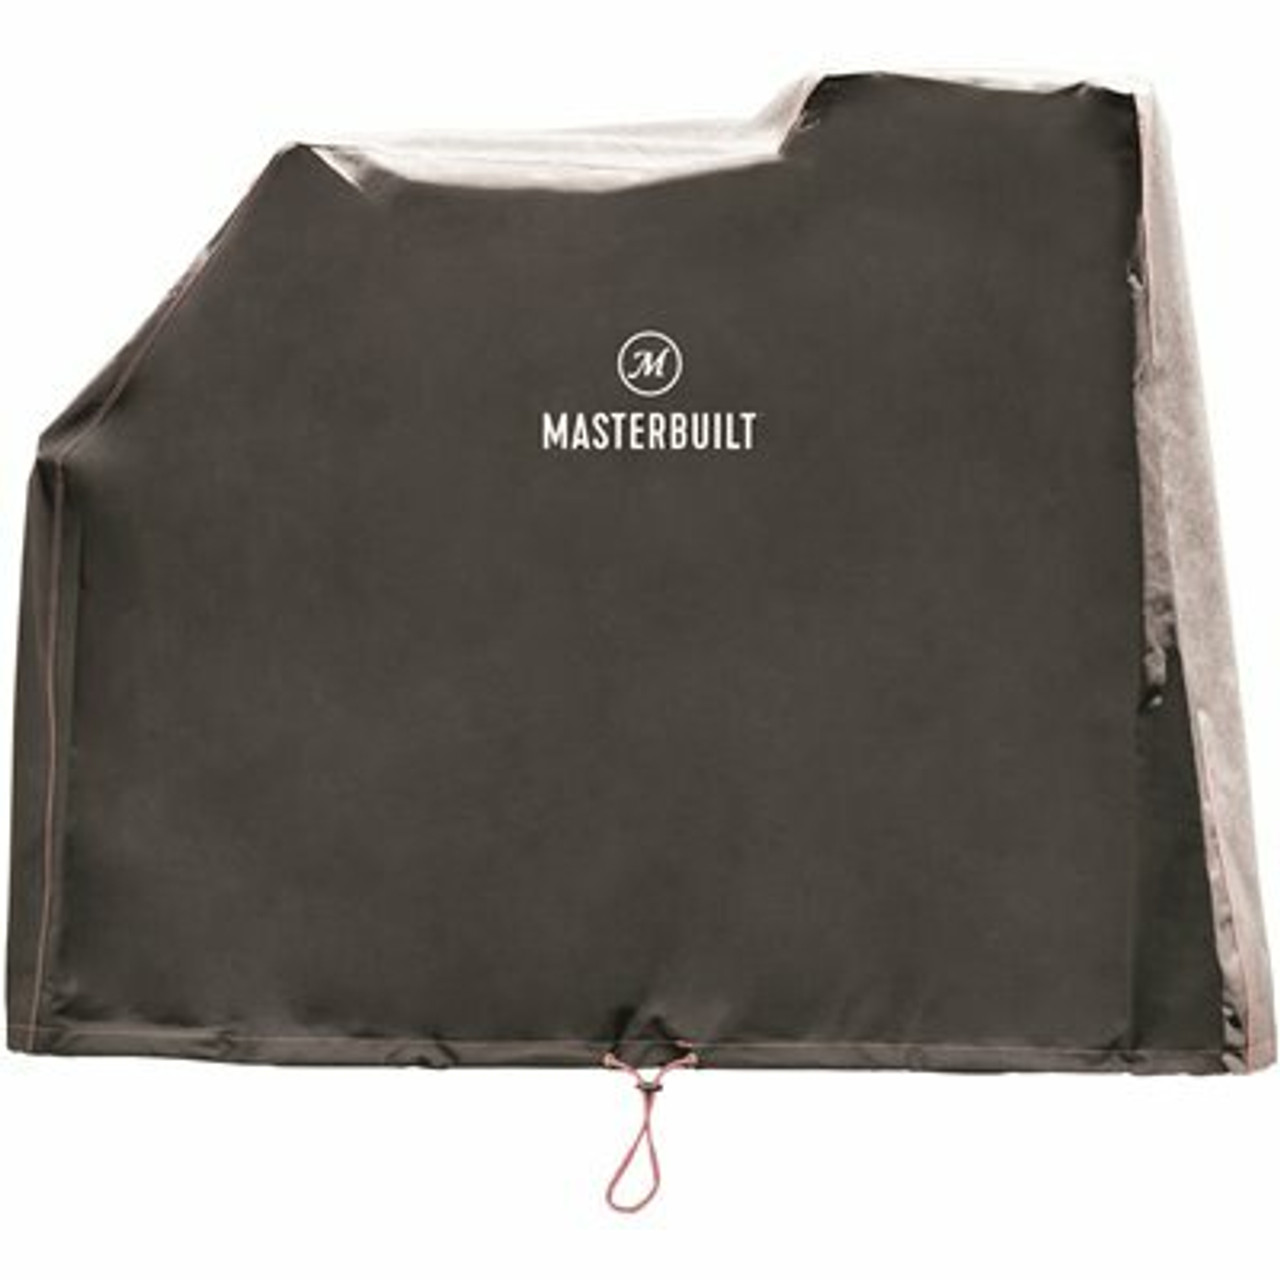 Masterbuilt Gravity Series 560 Digital Charcoal Grill + Smoker Cover In Black